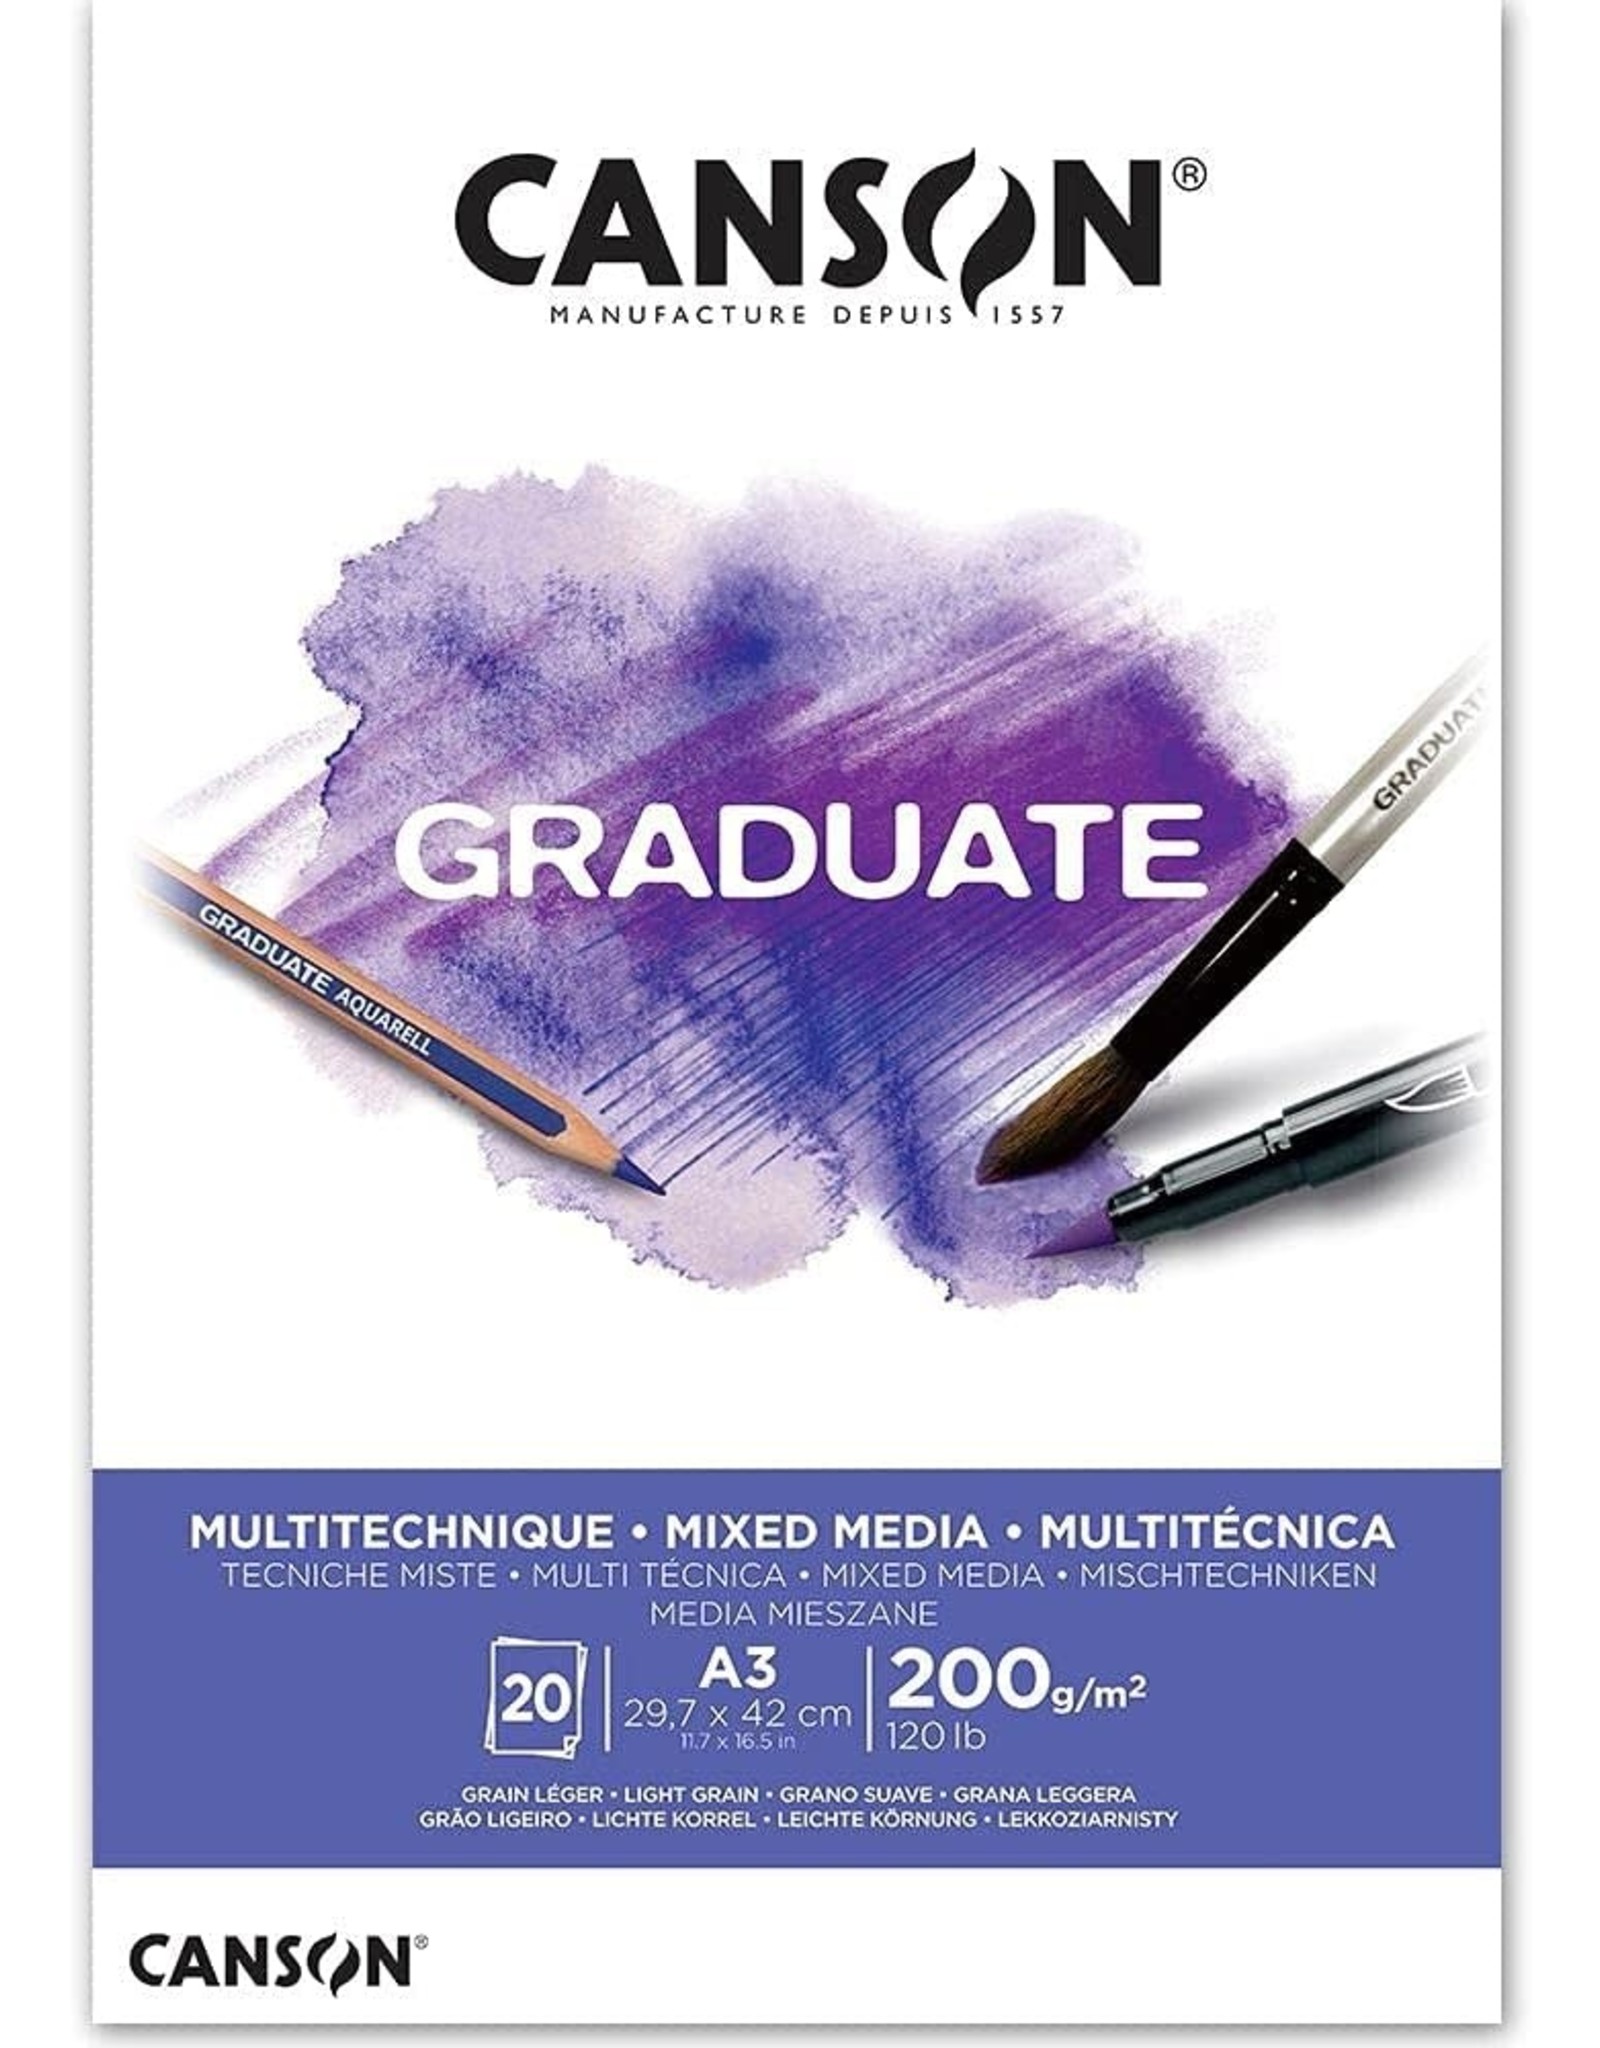 Canson Graduate Mixed Media Pad, 9” x 12” - The Art Store